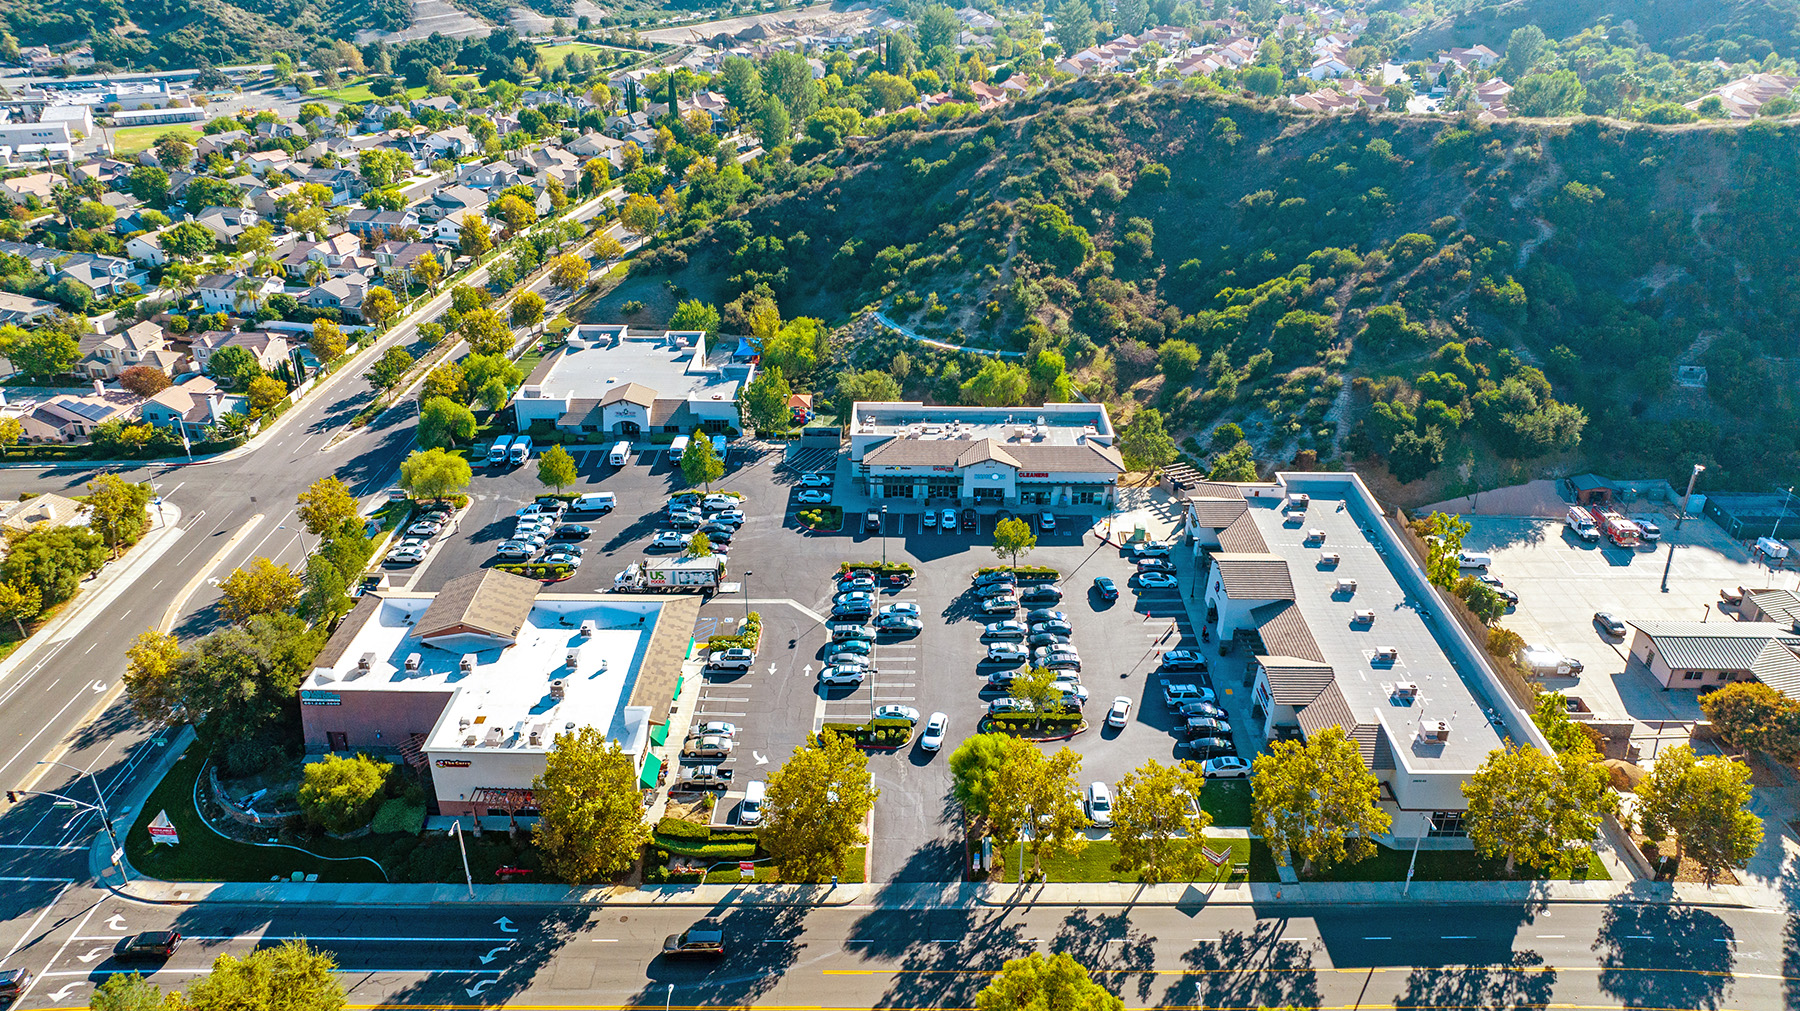 Hanley Investment Group Arranges Sale of Neighborhood Shopping Center in Santa Clarita, Calif.